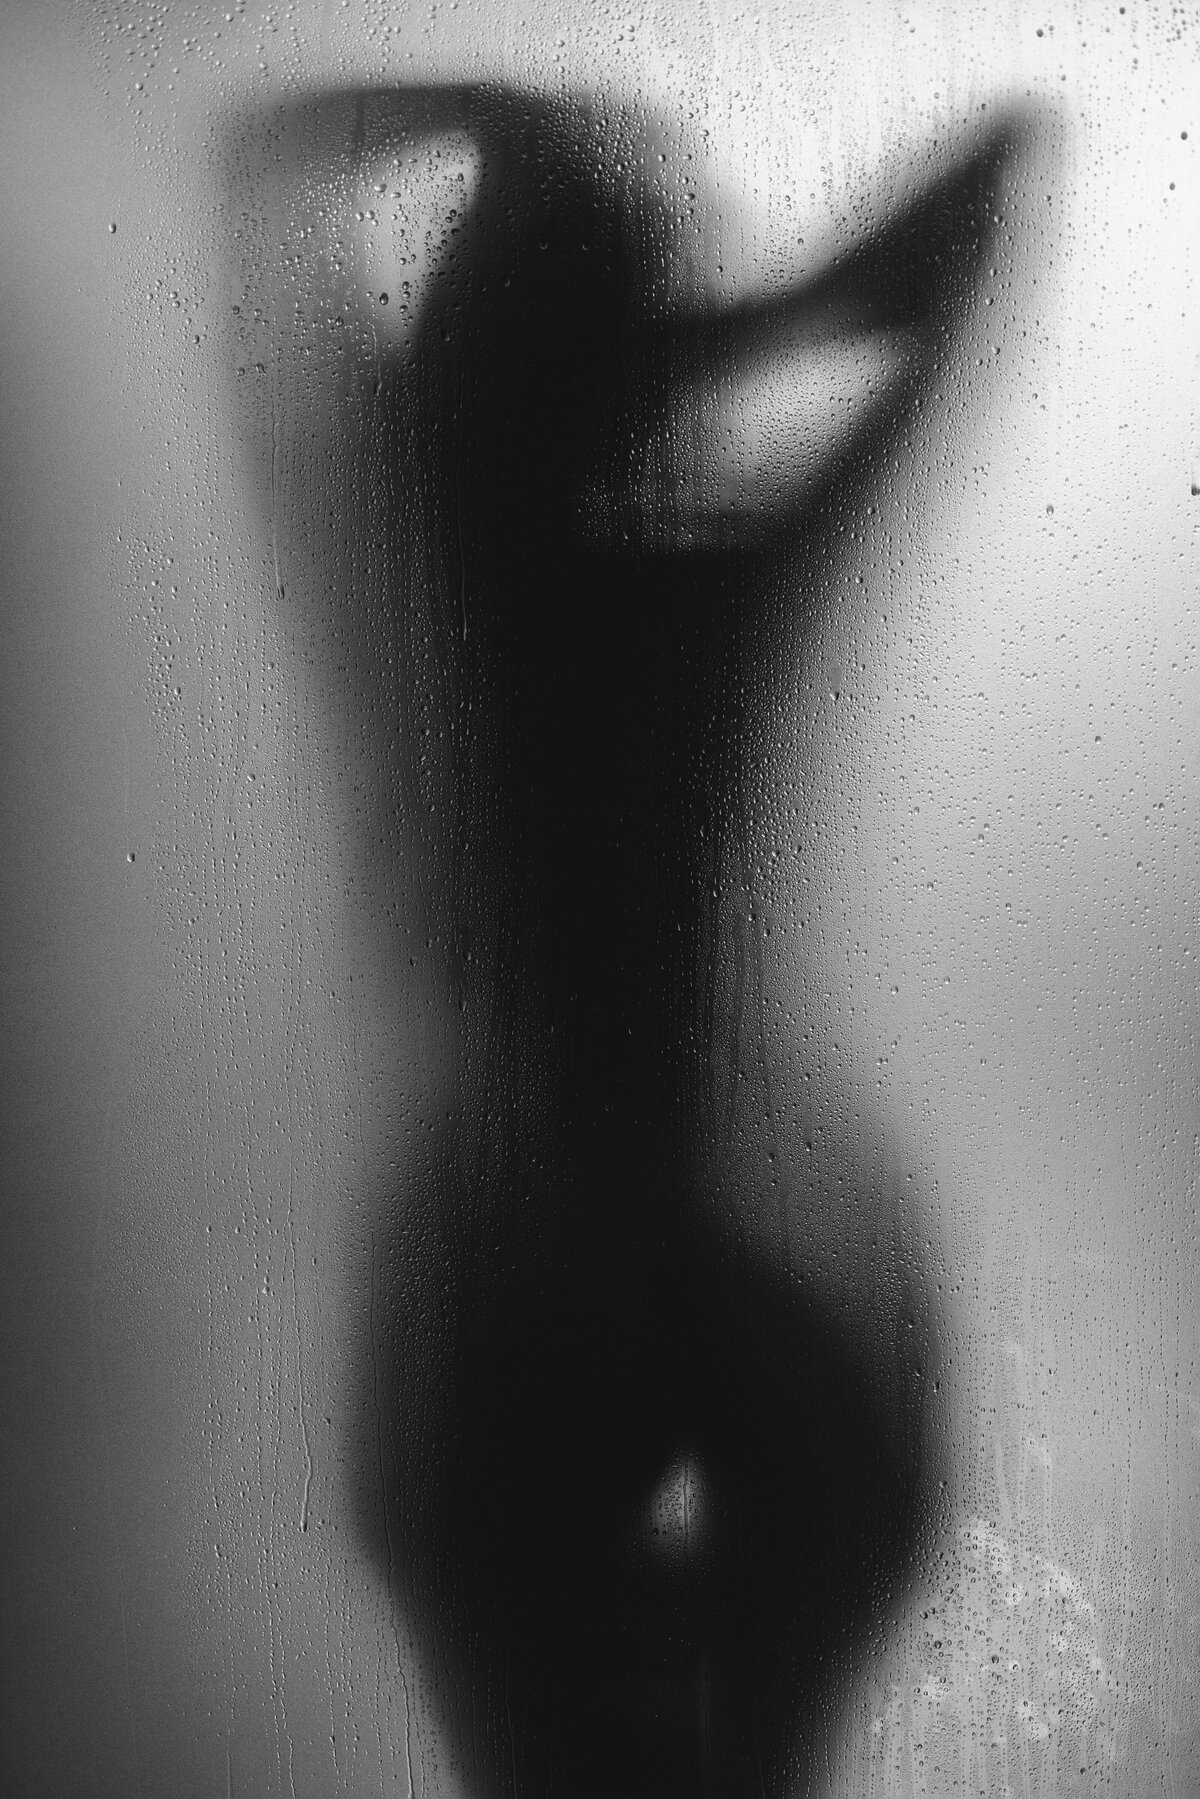 Woman silhouette behind a shower door